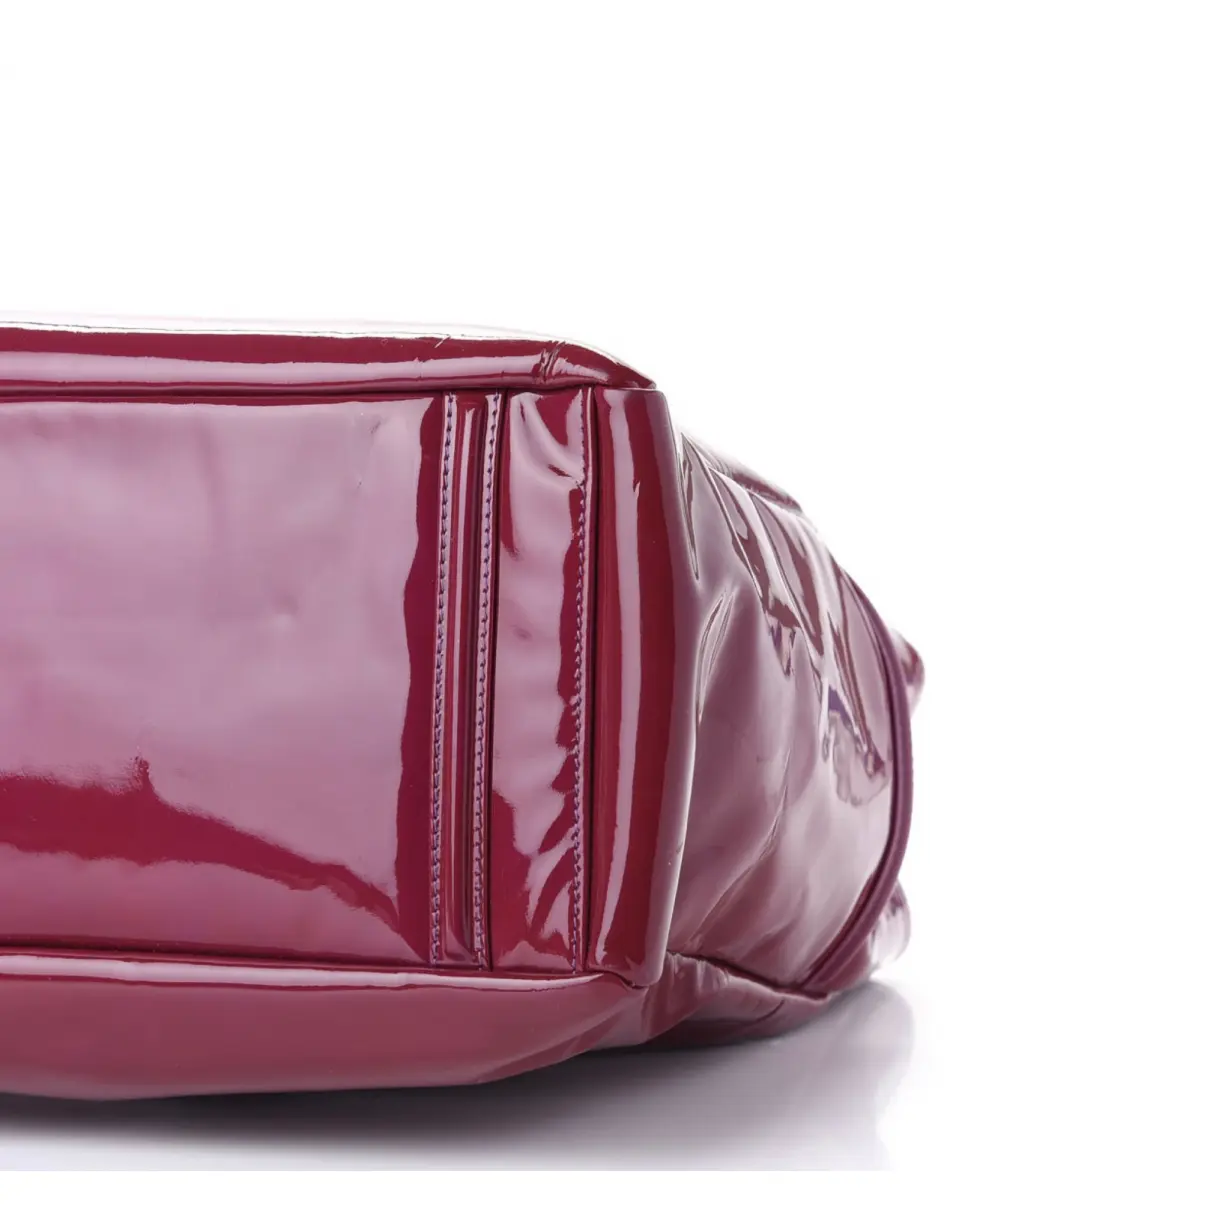 Buy Chanel Patent leather handbag online